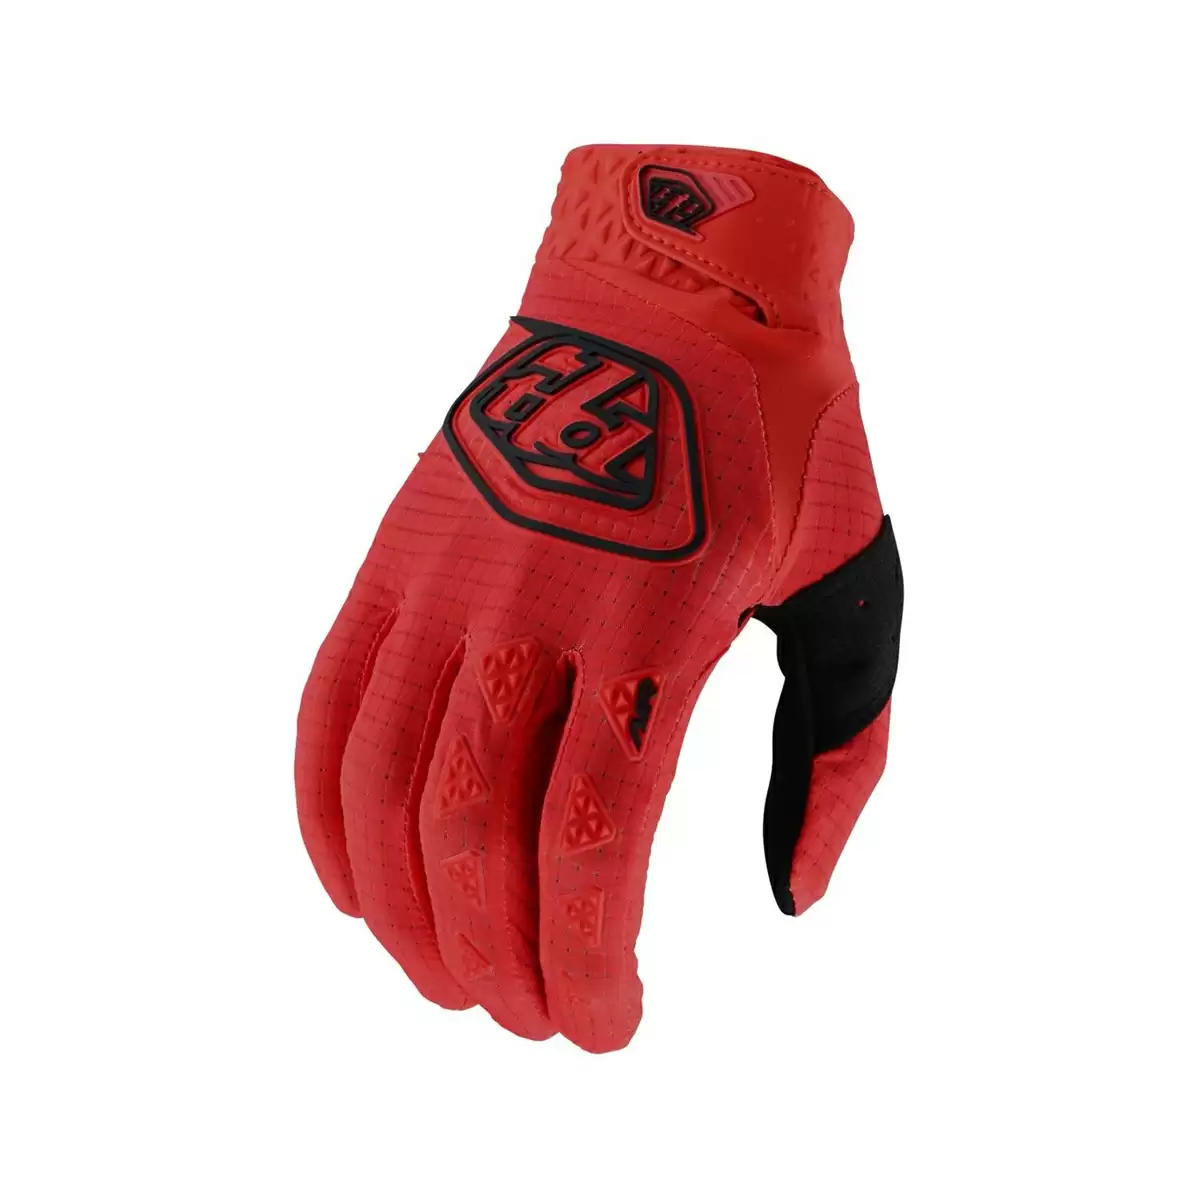 MTB Air Handschuhe Rot Größe L - image